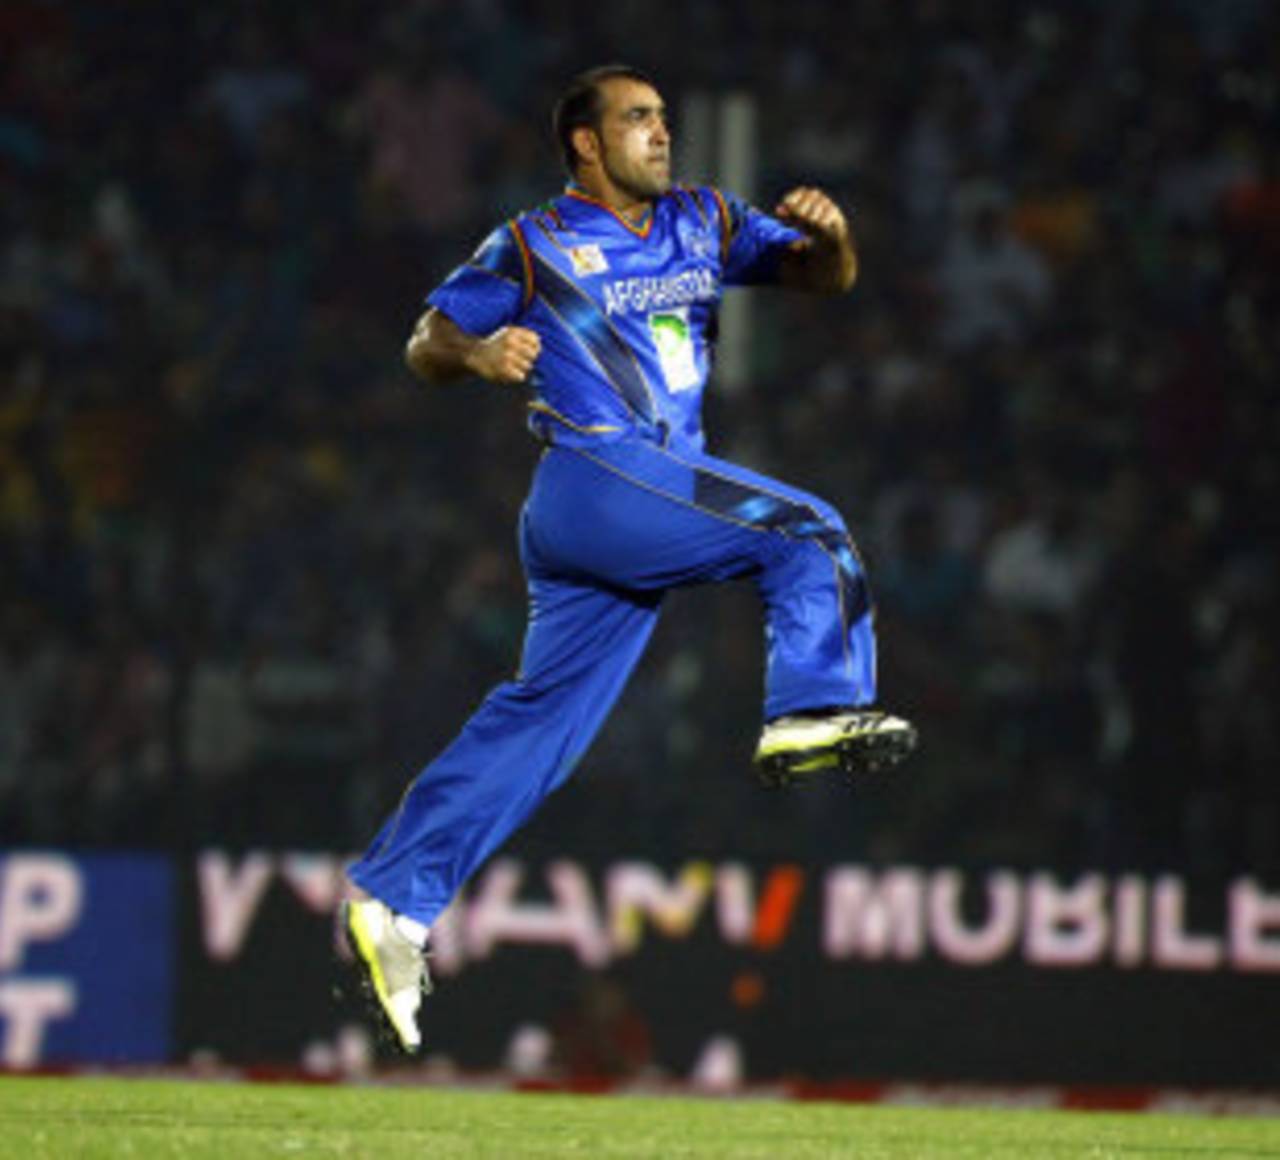 Samiullah Shenwari celebrates a wicket, Bangladesh v Afghanistan, Asia Cup, Fatullah, March 1, 2014